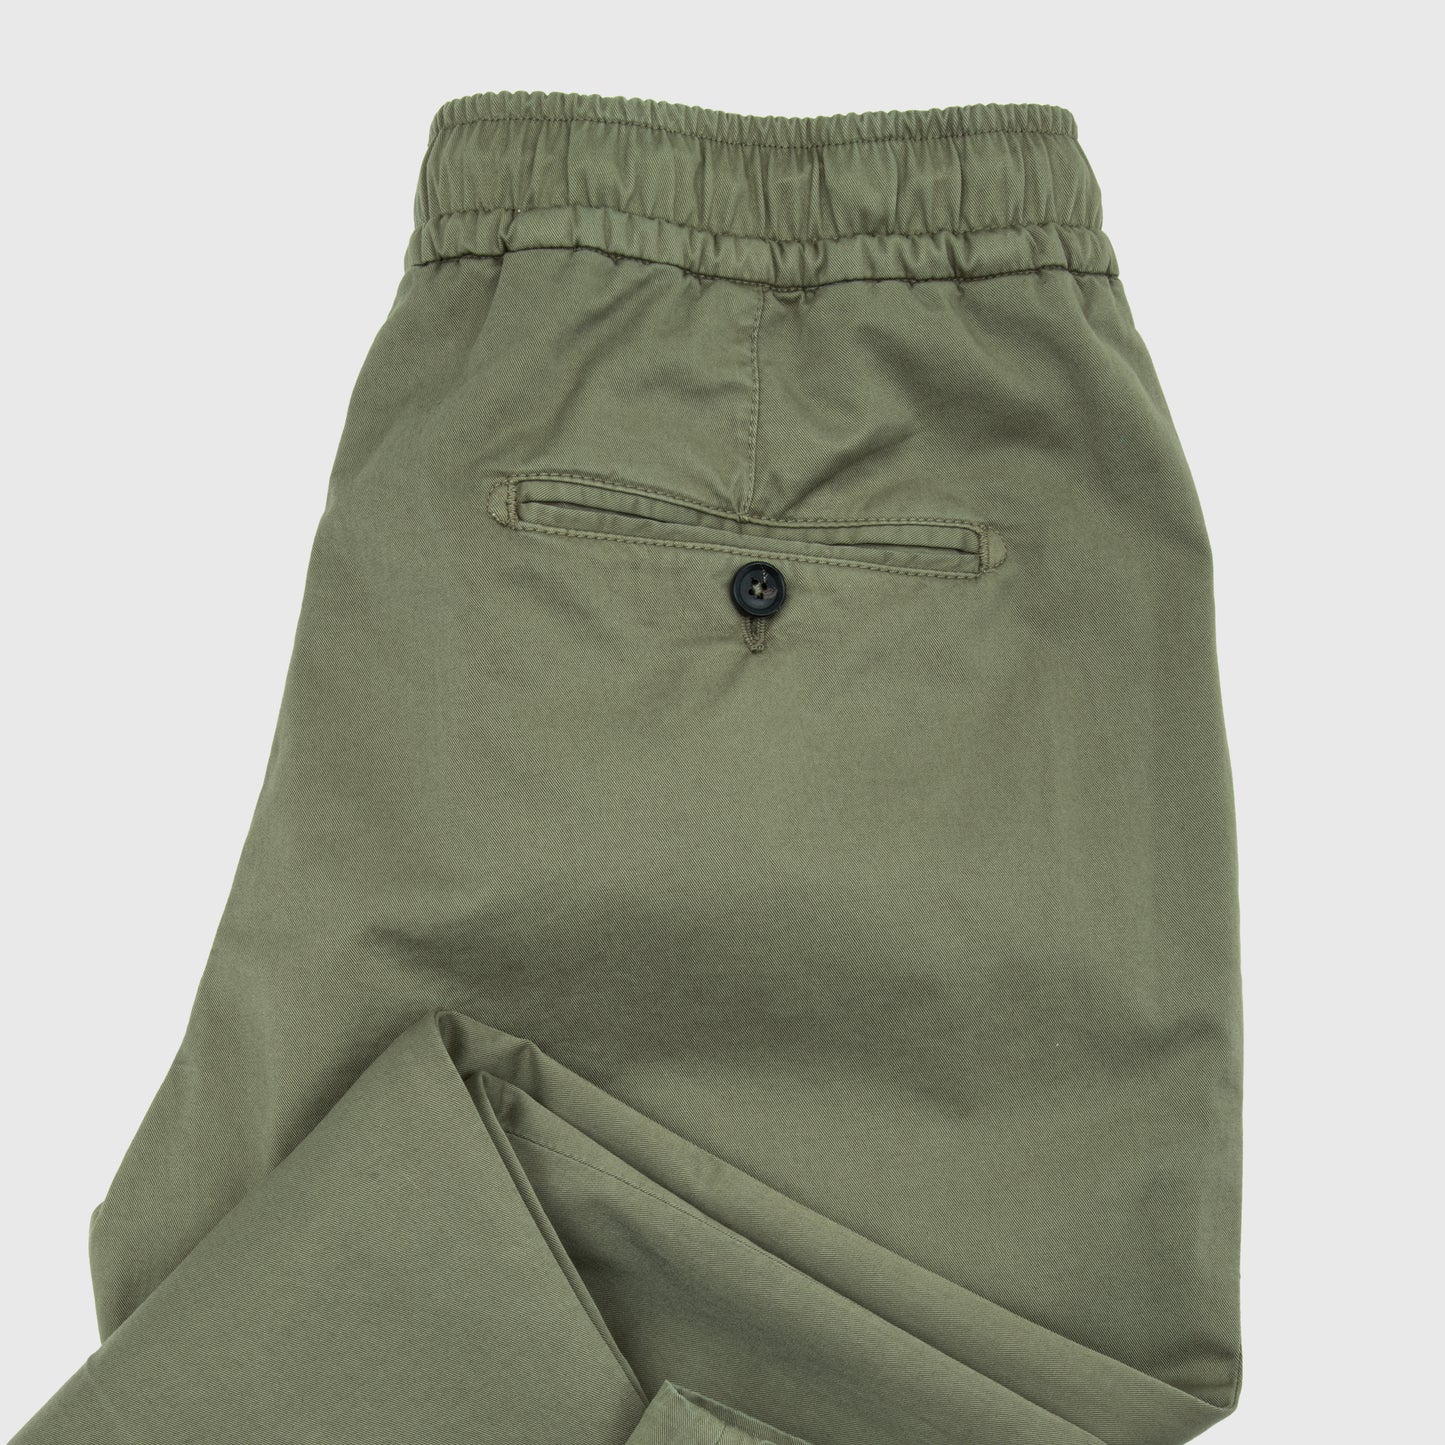 Gabardine Comfort Cotton Drawstring Trousers Olive Green